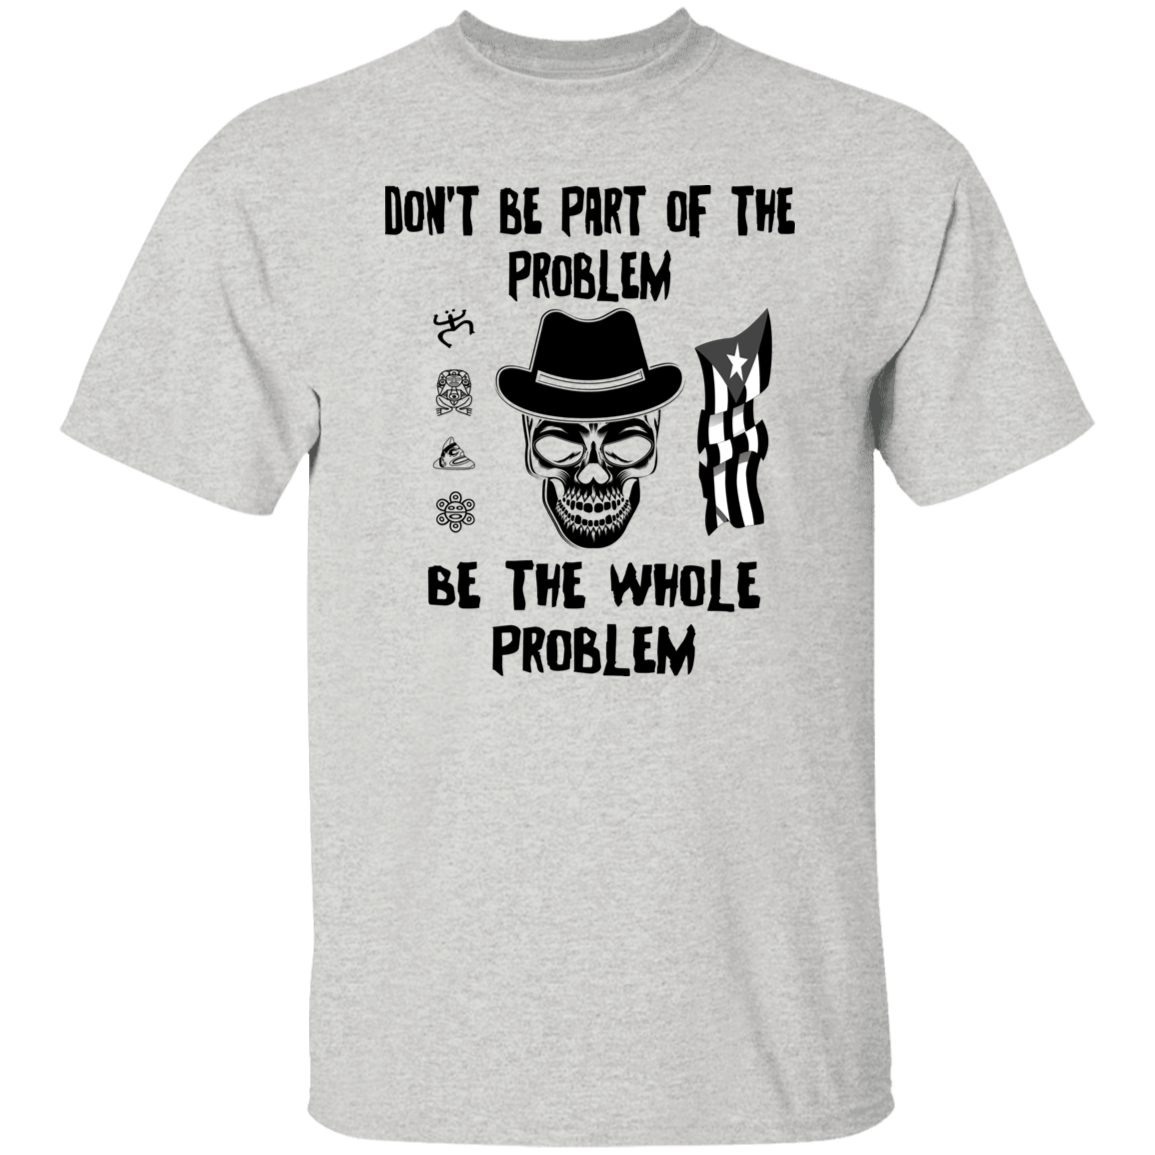 Be The Whole Problem 5.3 oz. T-Shirt